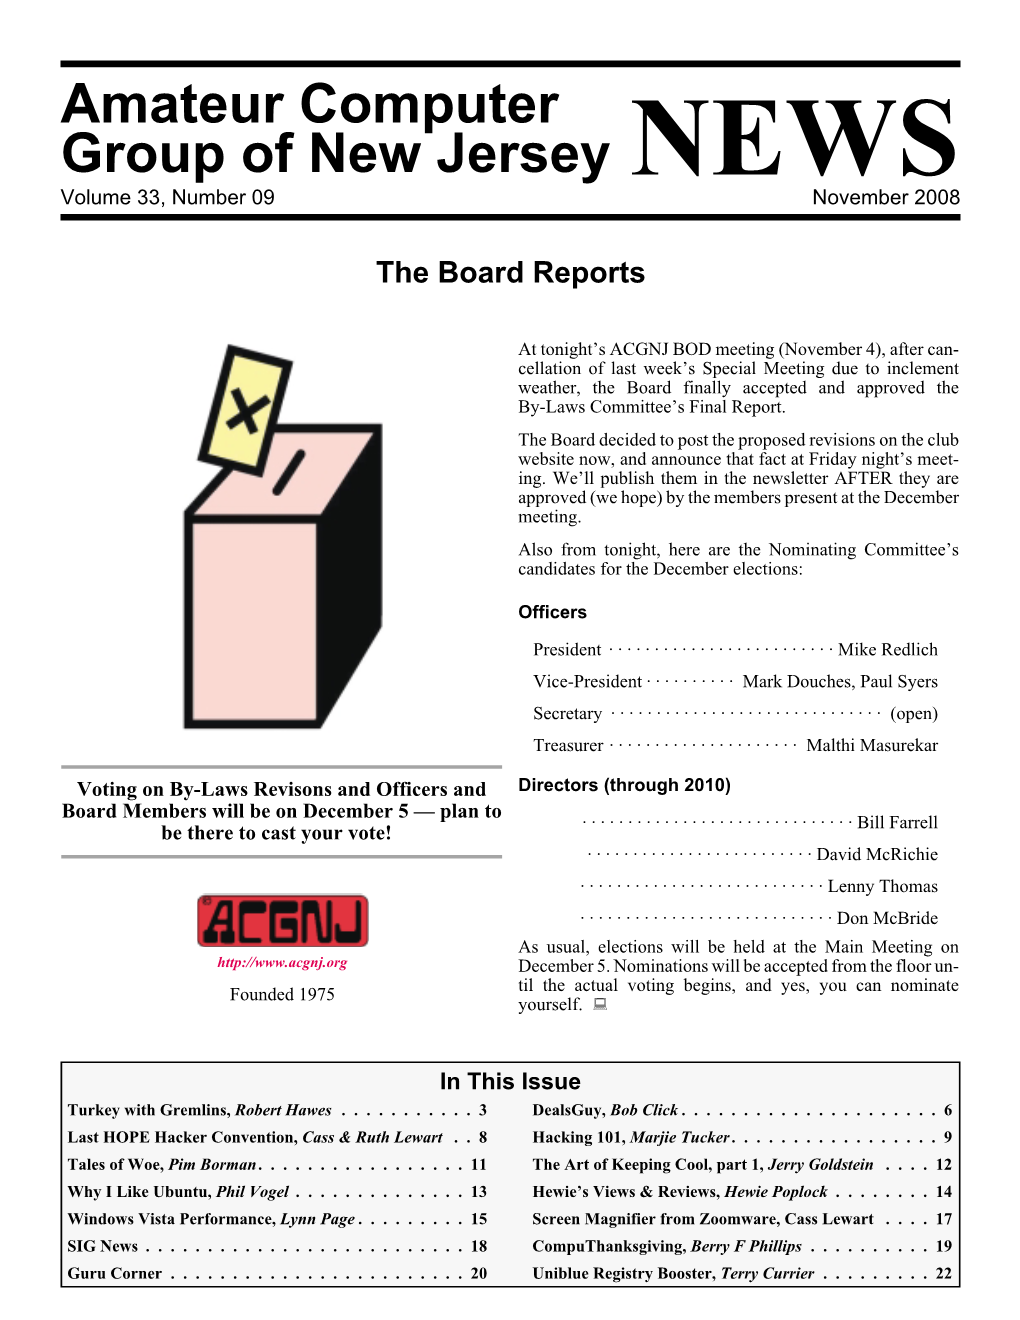 Amateur Computer Group of New Jersey NEWS Volume 33, Number 09 November 2008